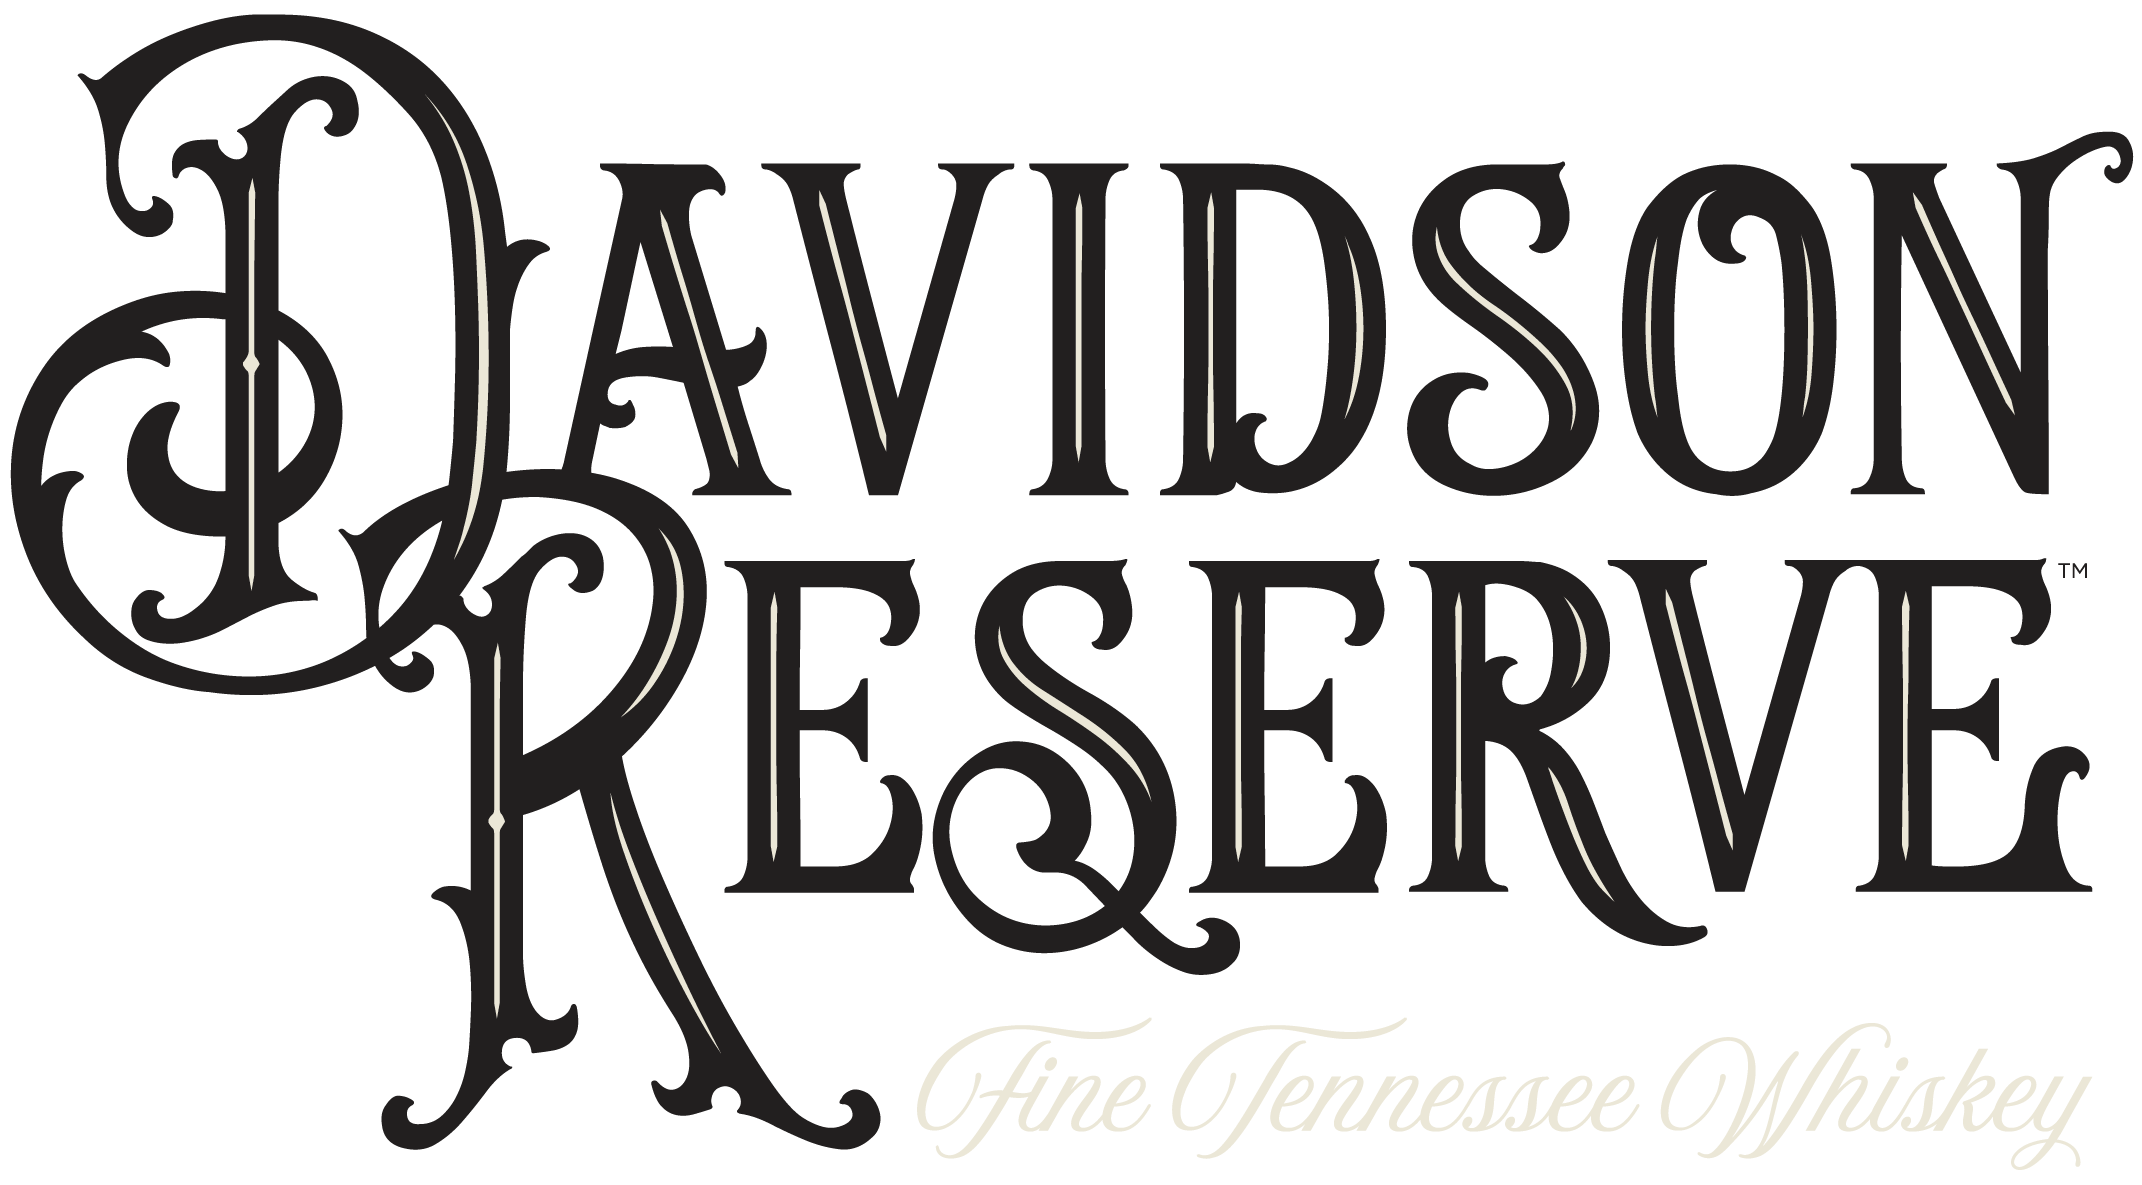 Davidson Reserve Fine Tennessee Whiskey